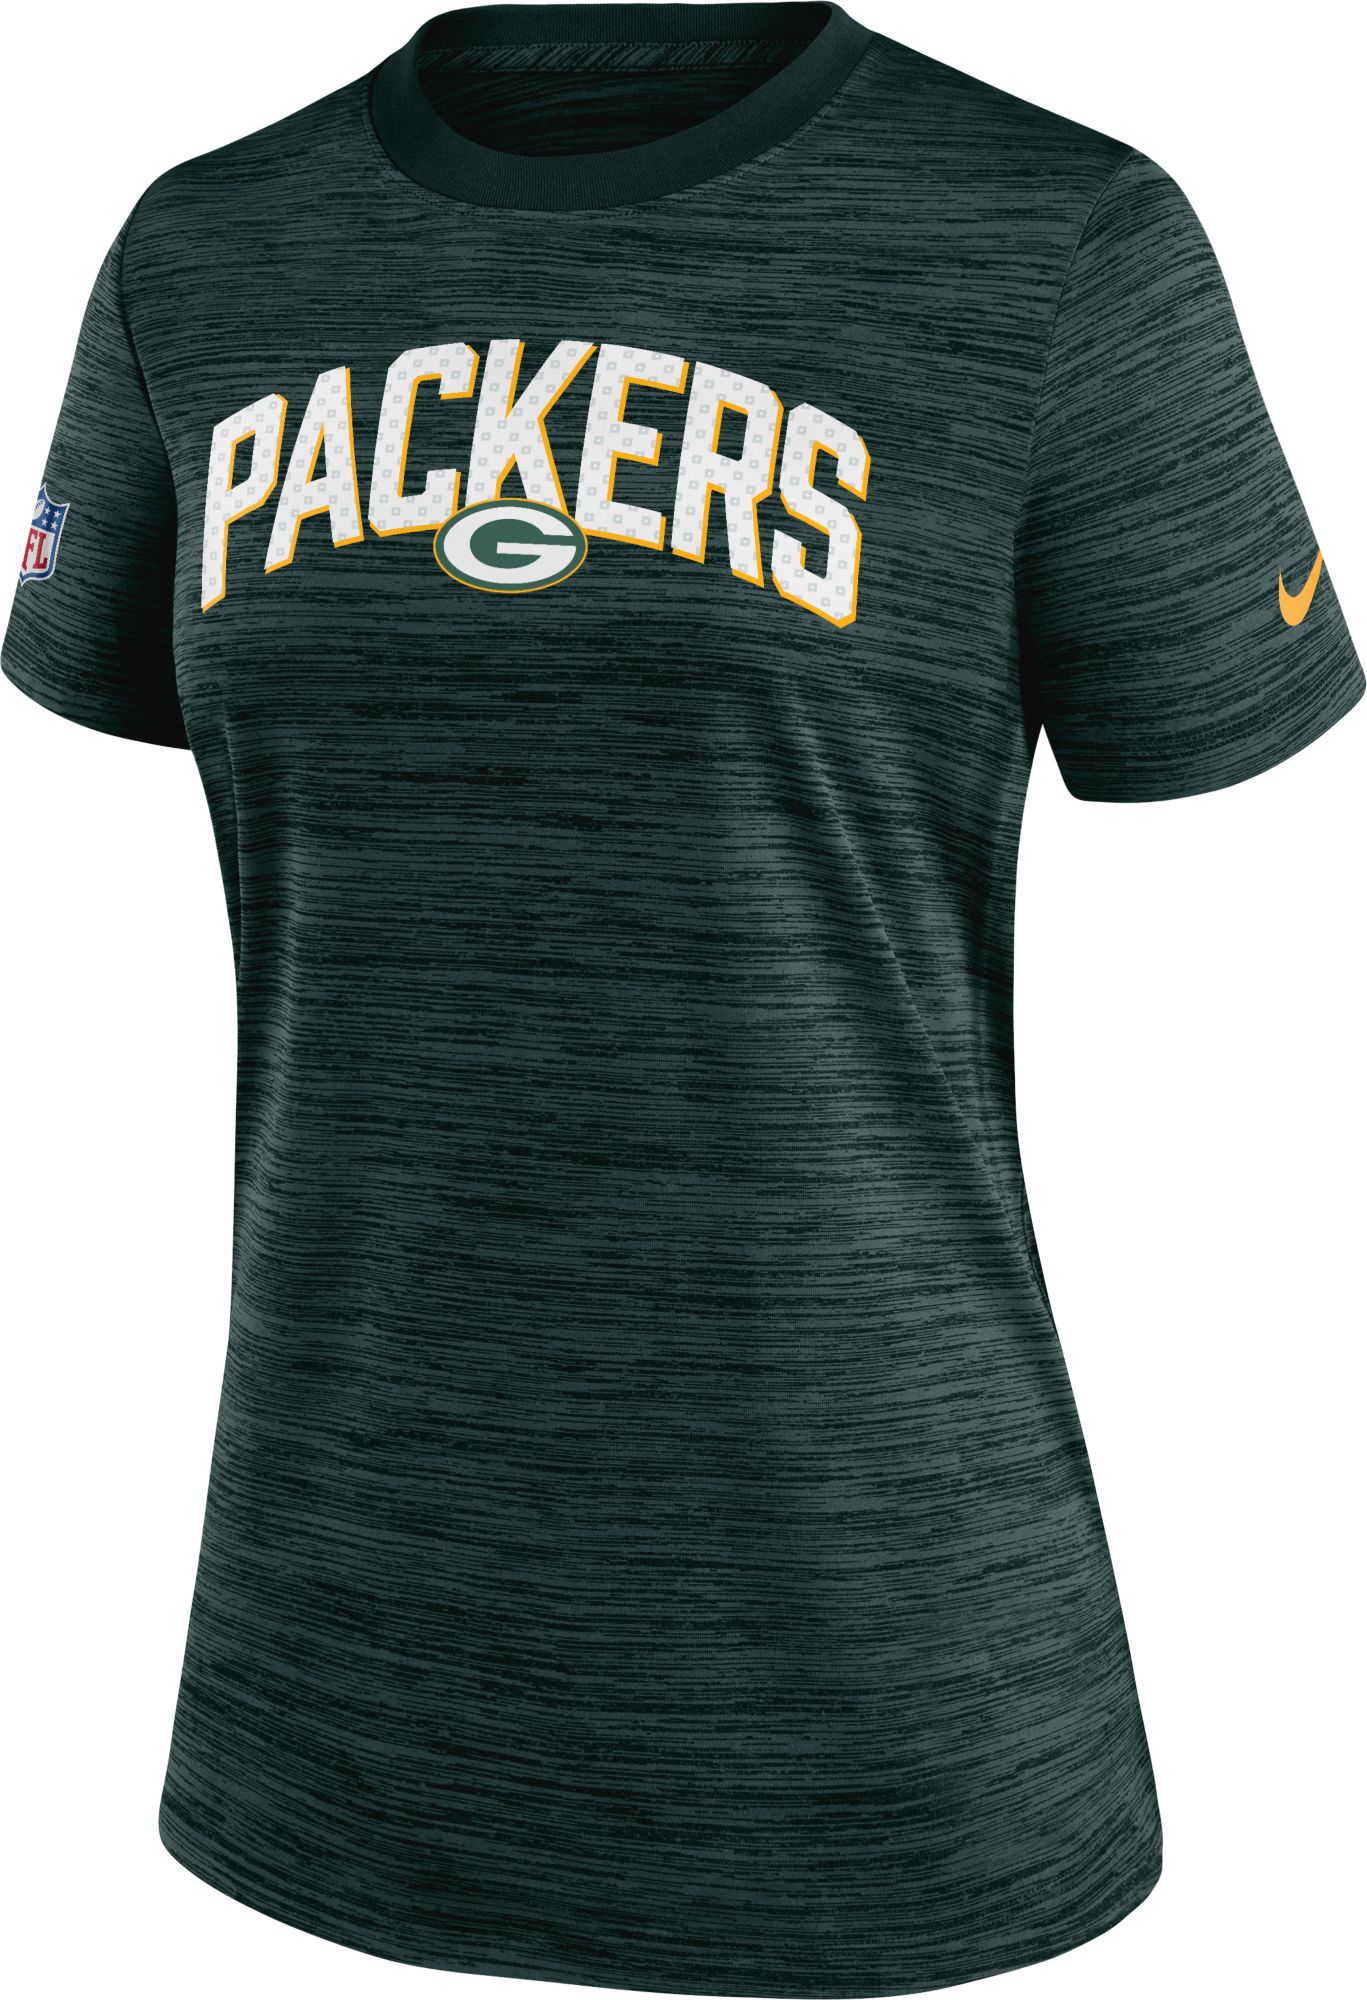 Nike / Women's Green Bay Packers Sideline Velocity Green T-Shirt